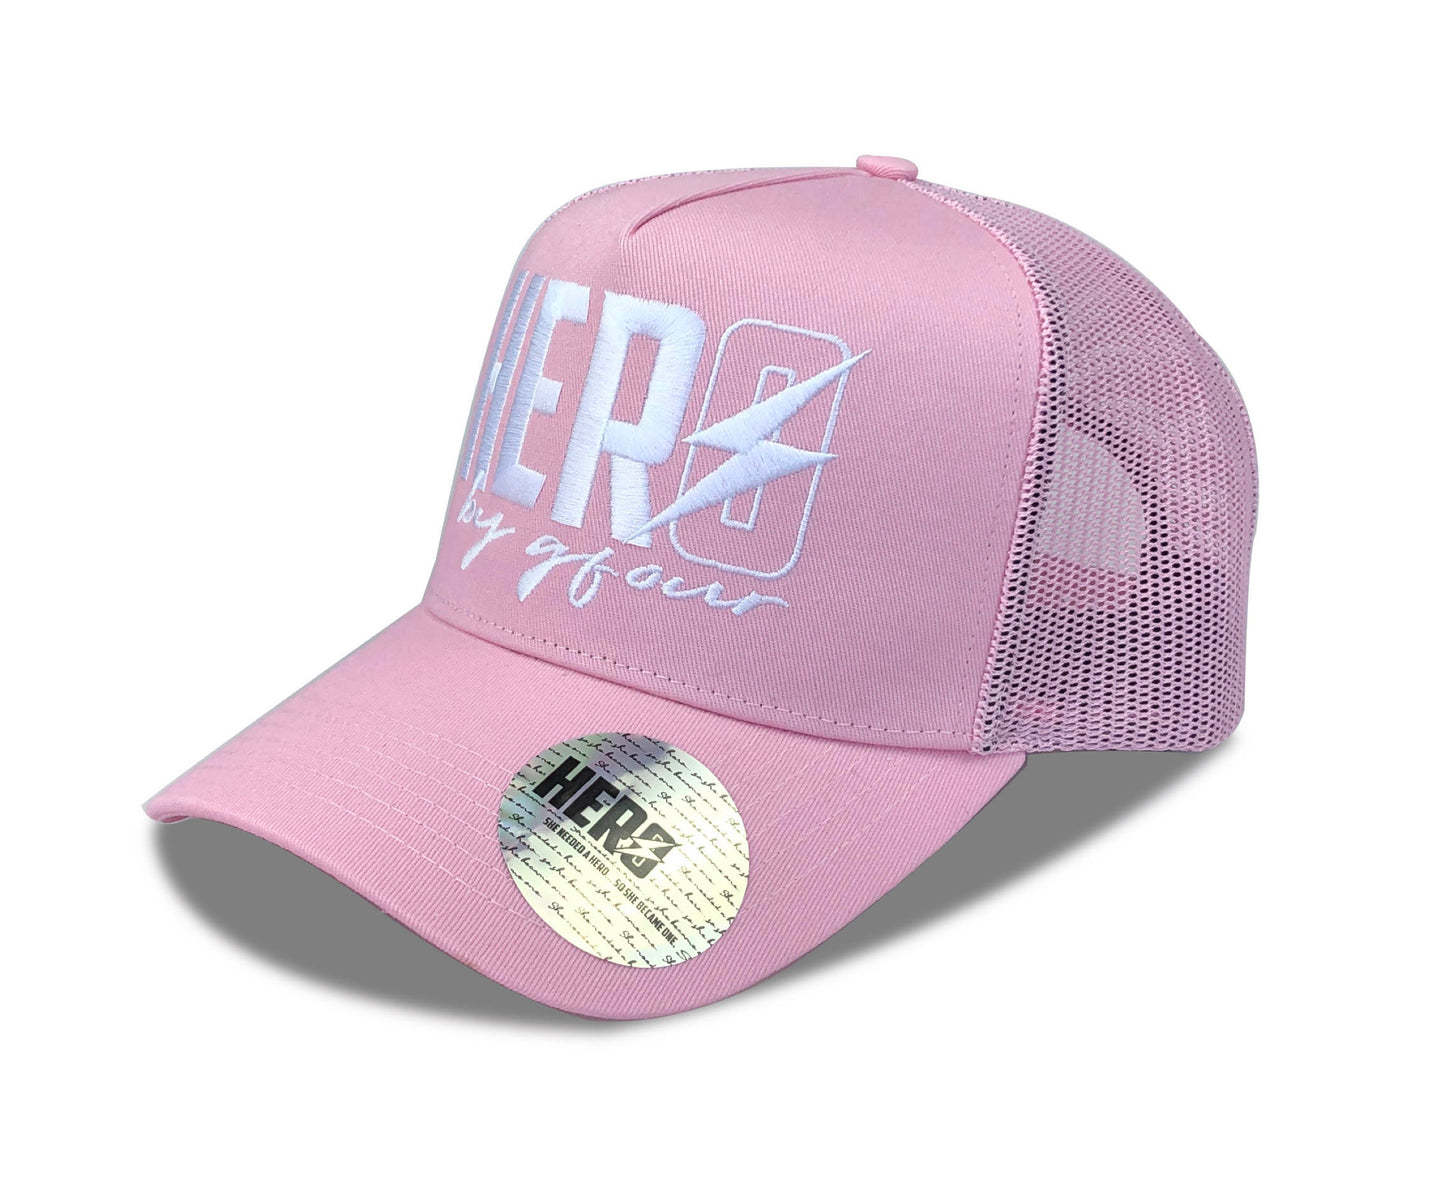 “HERo” Trucker - Light Pink